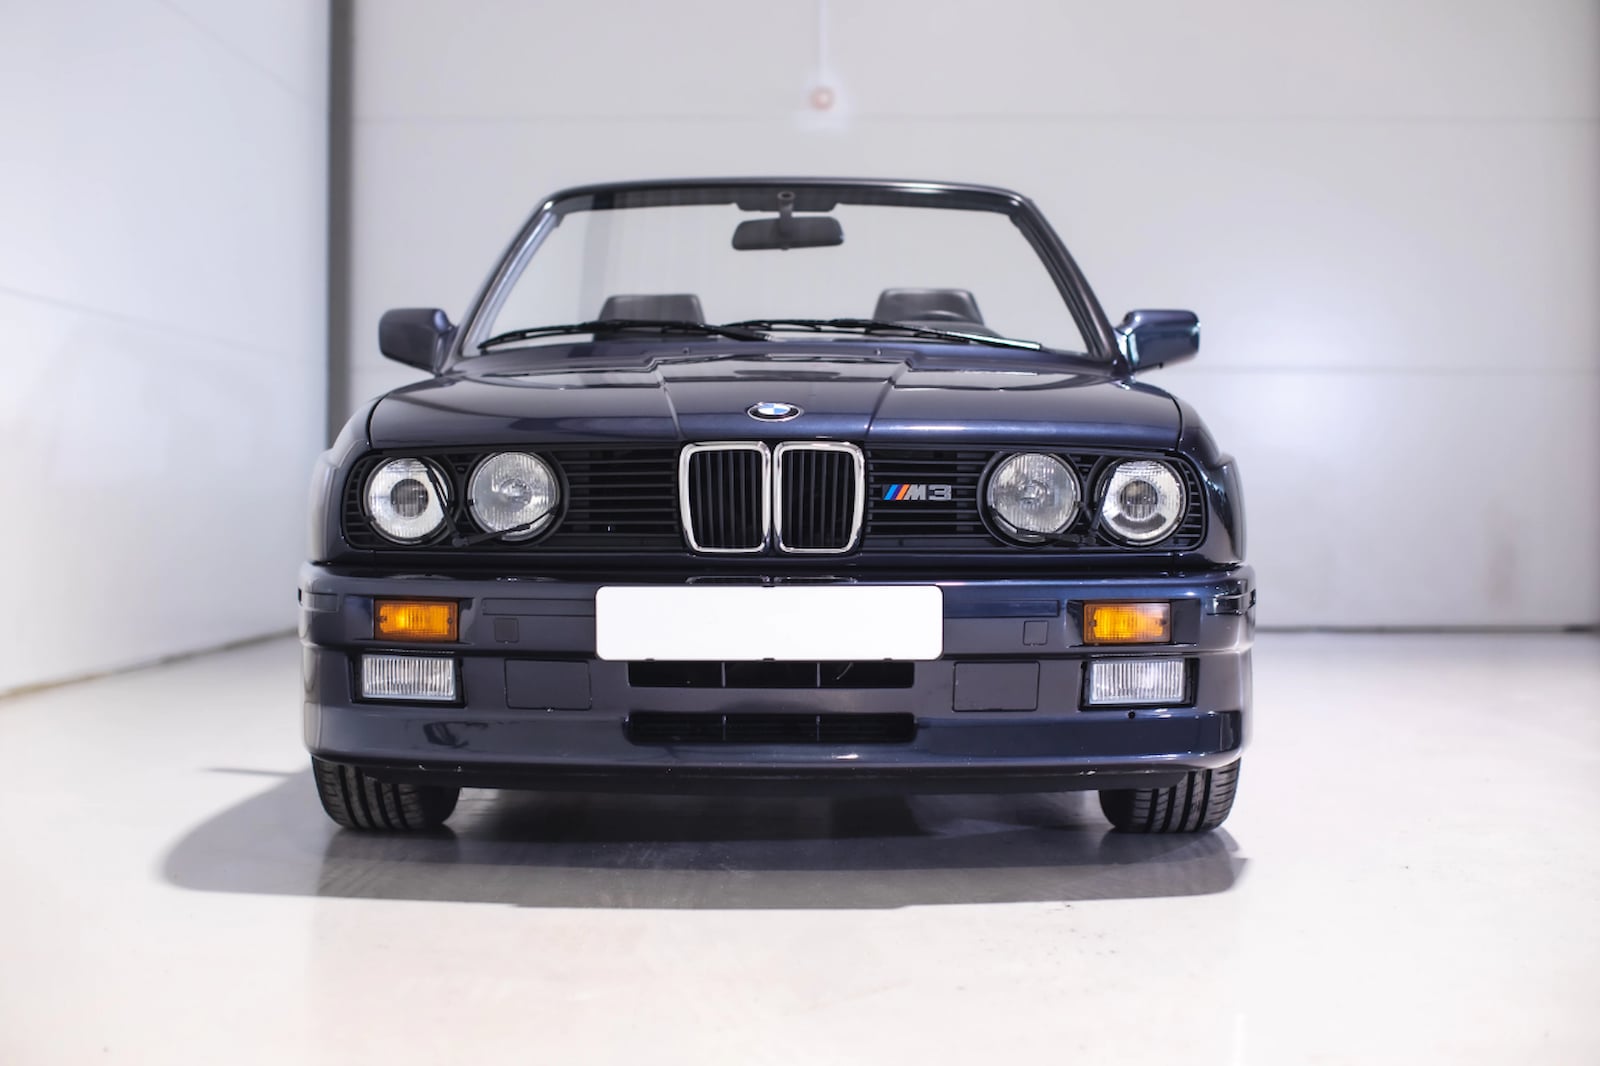 Frontale BMW M3 decappottabile del 1989 